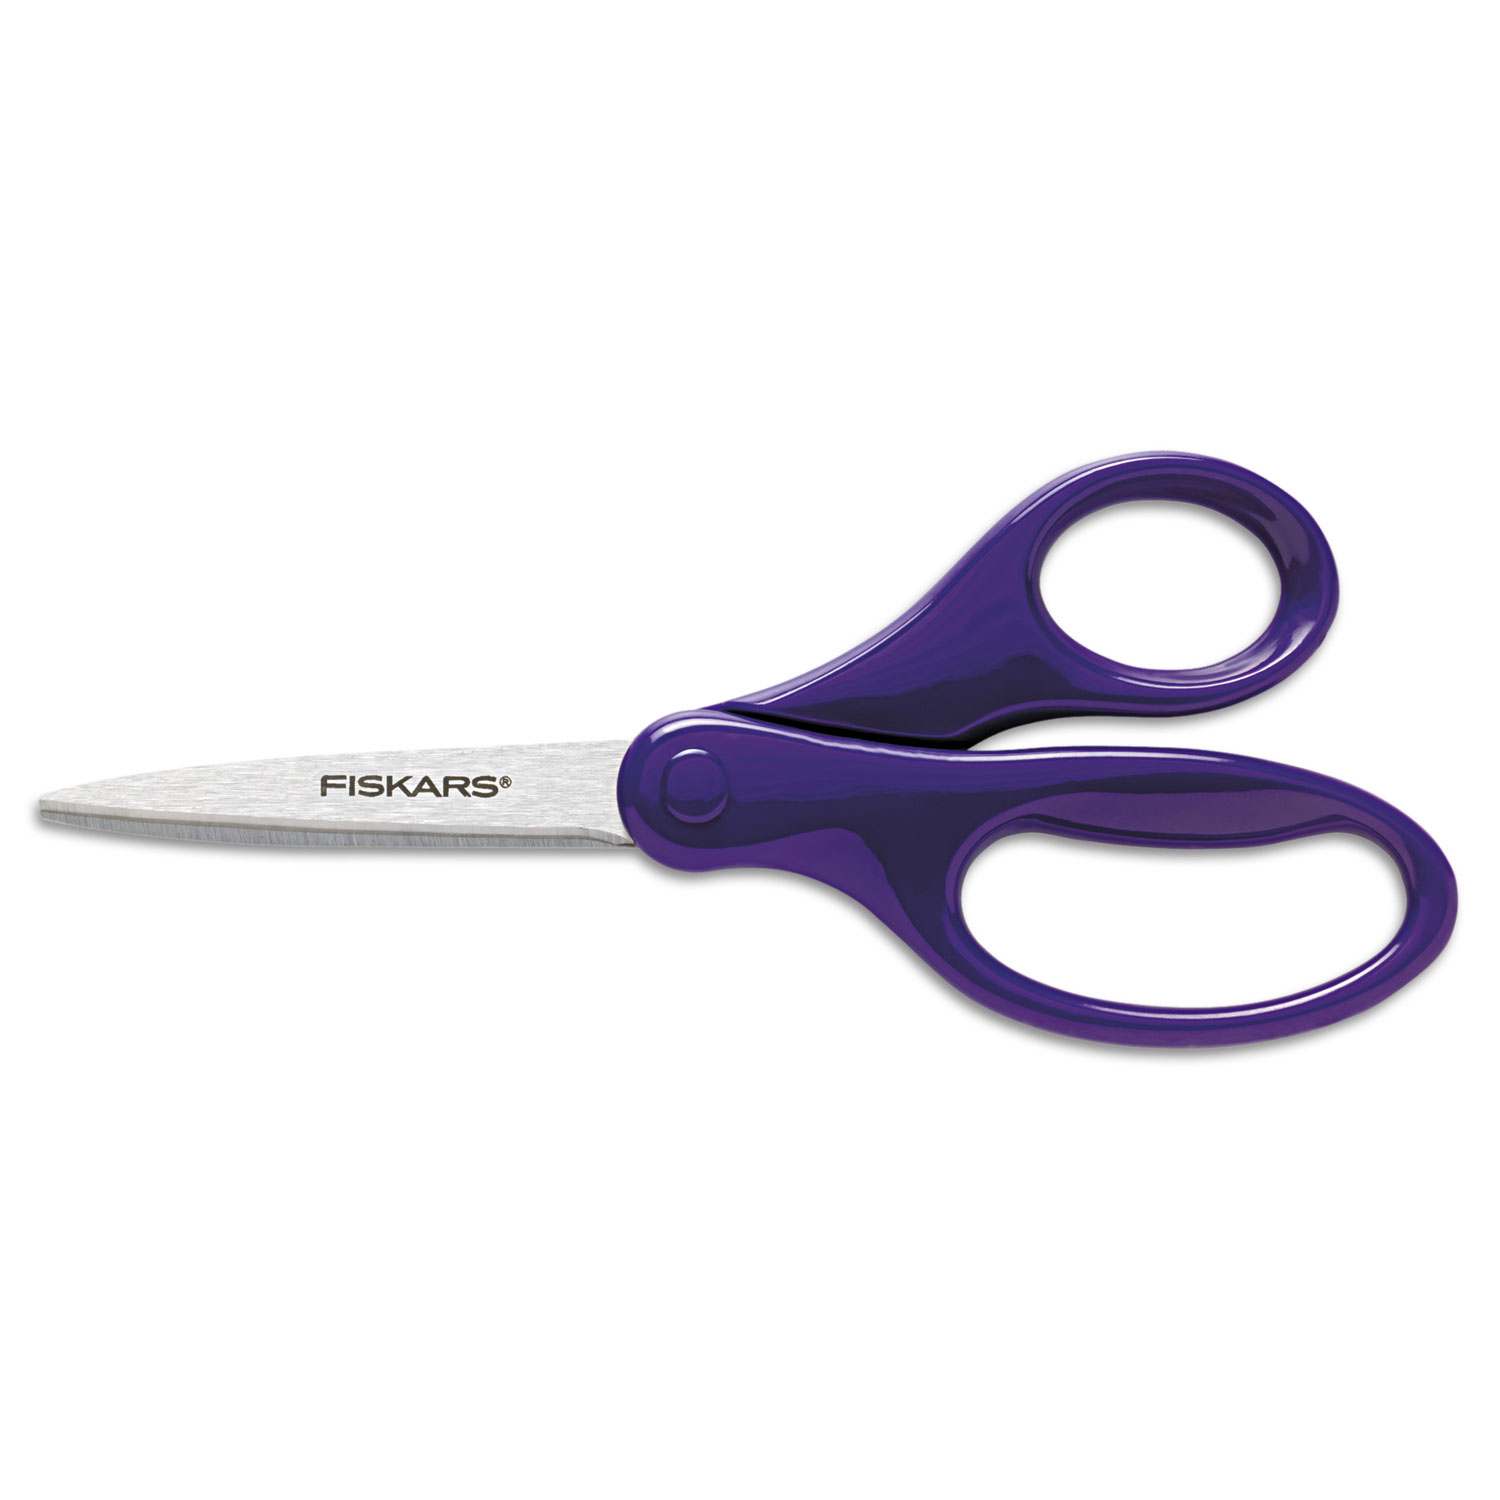  Fiskars 12-94587097J Kids/Student Scissors, Pointed Tip, 7 Long, 2.75 Cut Length, Assorted Straight Handles (FSK1294587097J) 